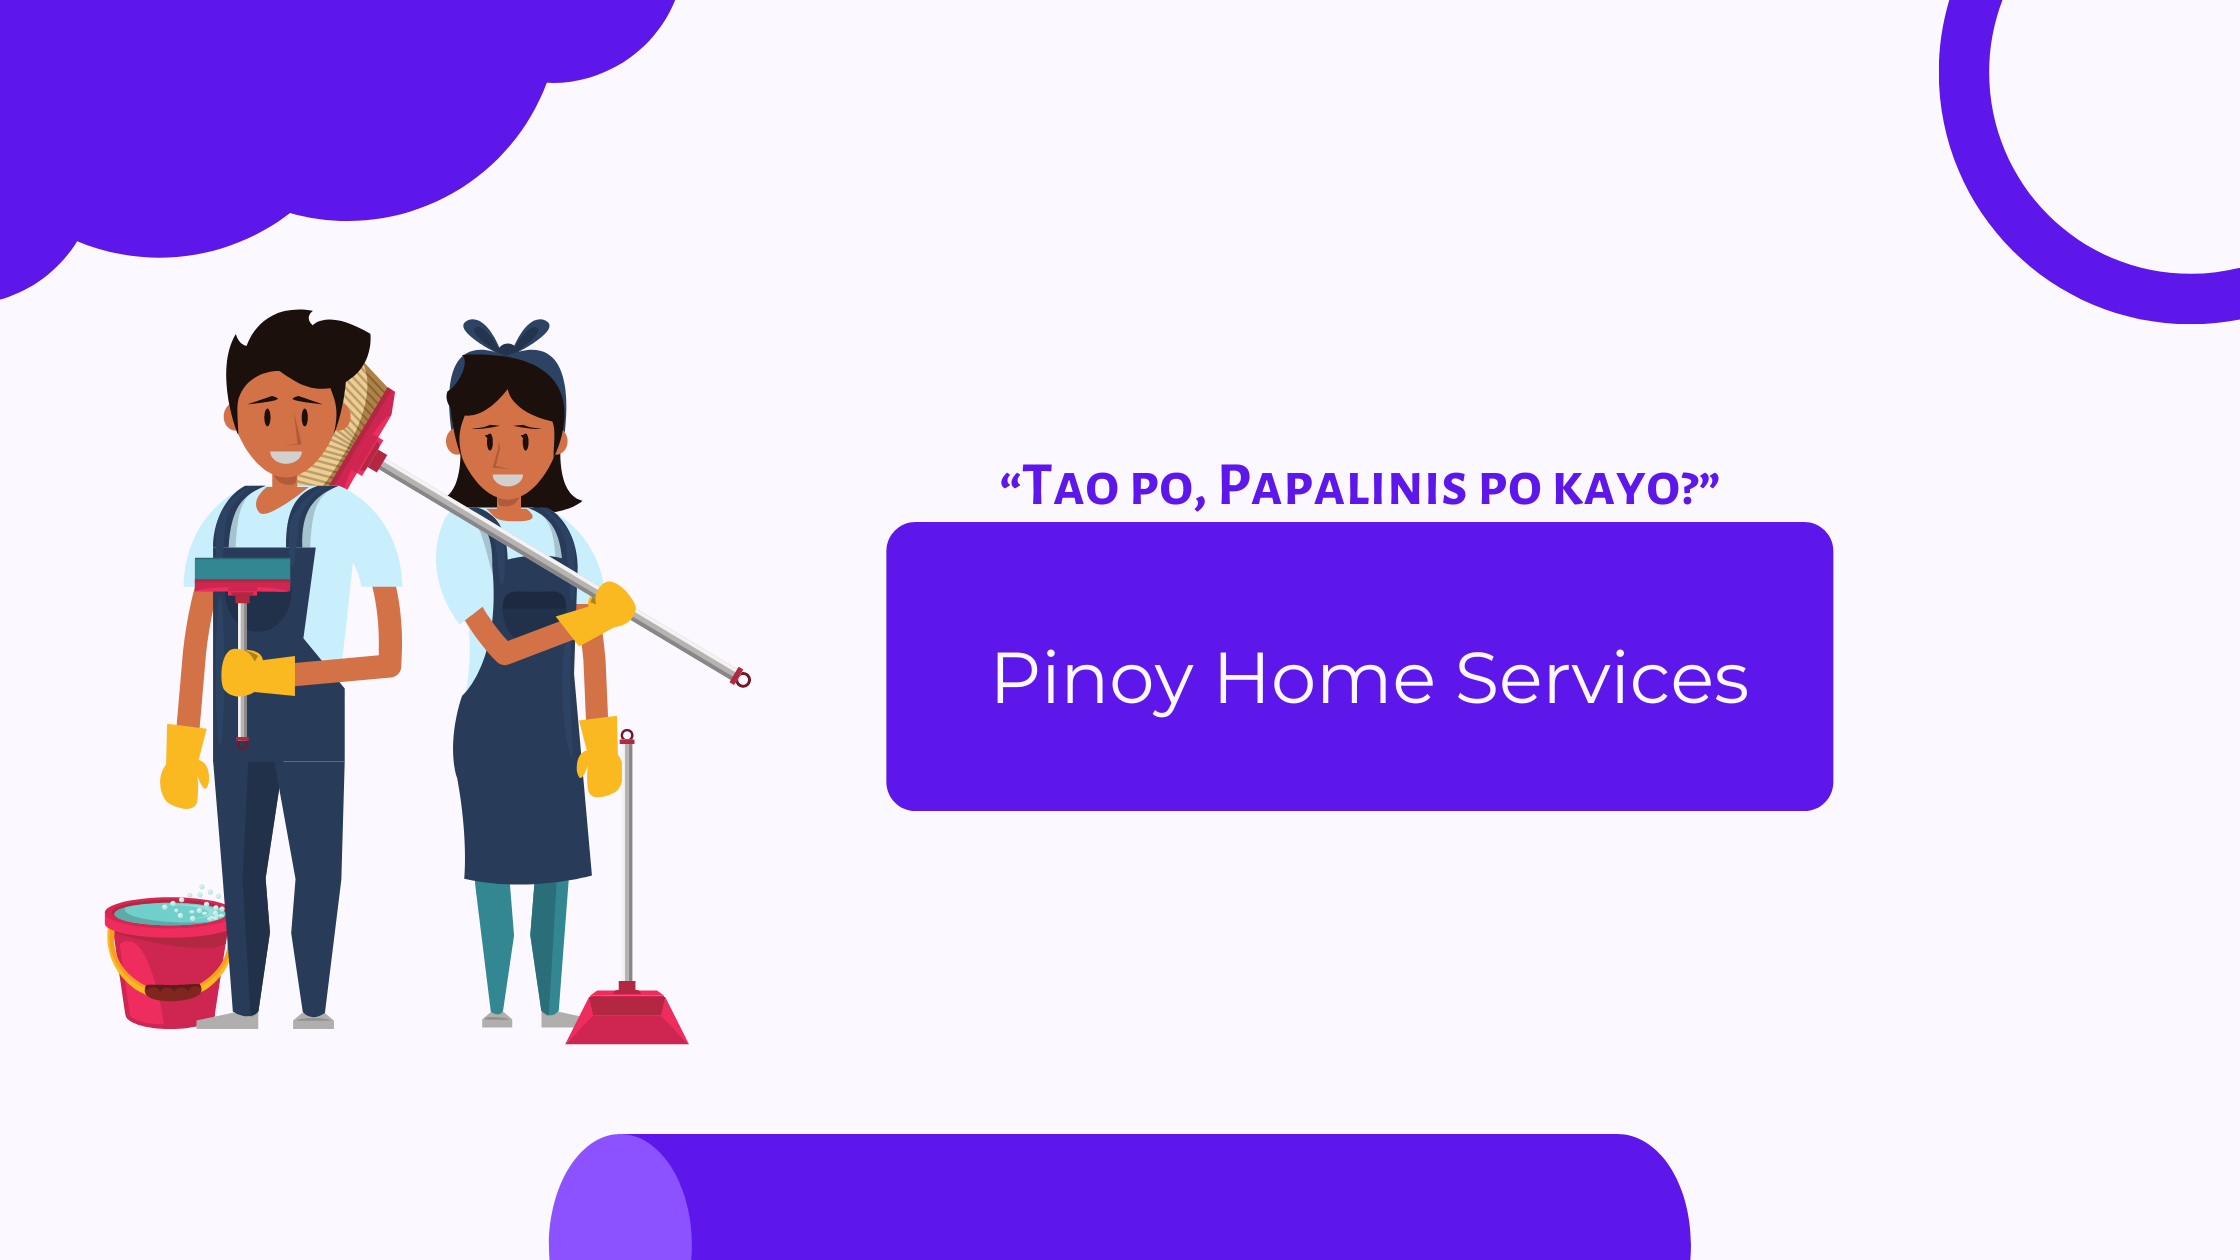 “Tao po, Papalinis po kayo” Pinoy Home Services